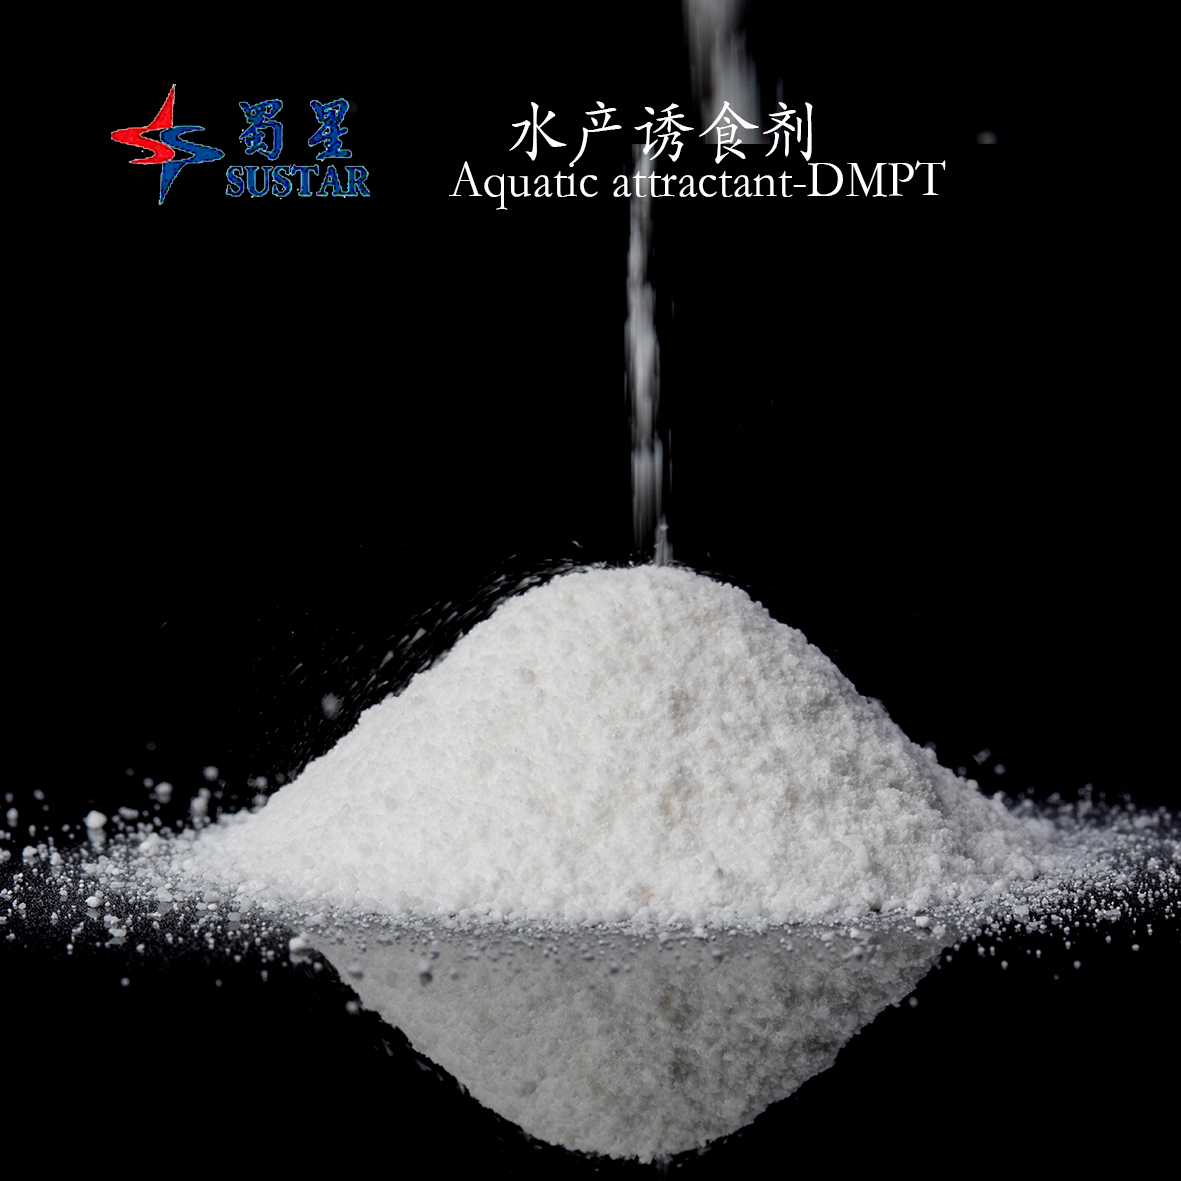 DMPT Dimetil-Beta-Propiotetina Aquapro Polvo cristalino blanco atrayente acuático